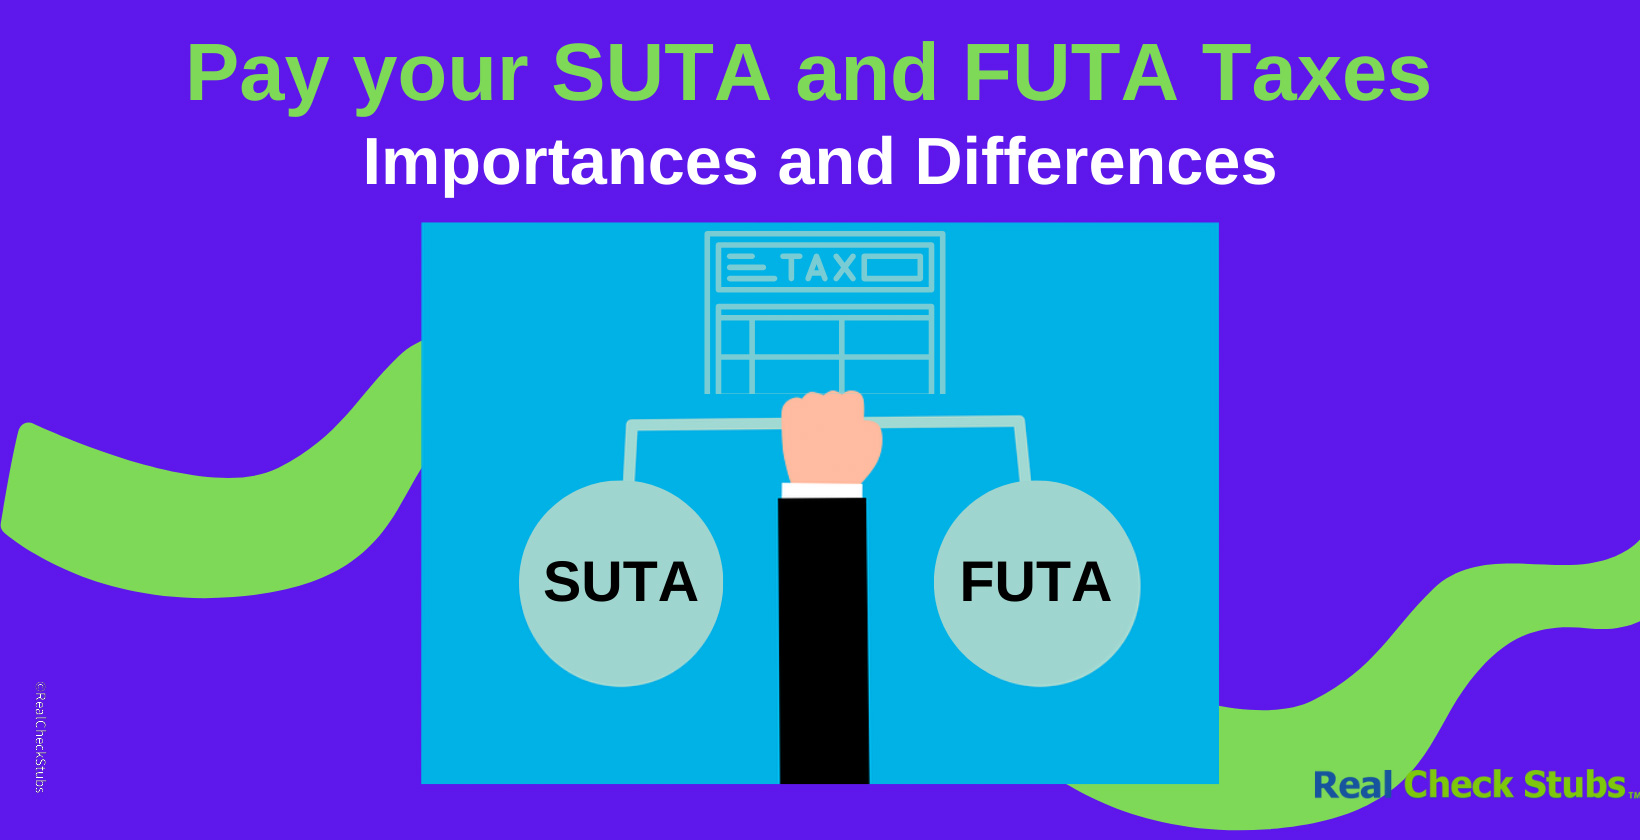 Pay your SUTA and FUTA taxes